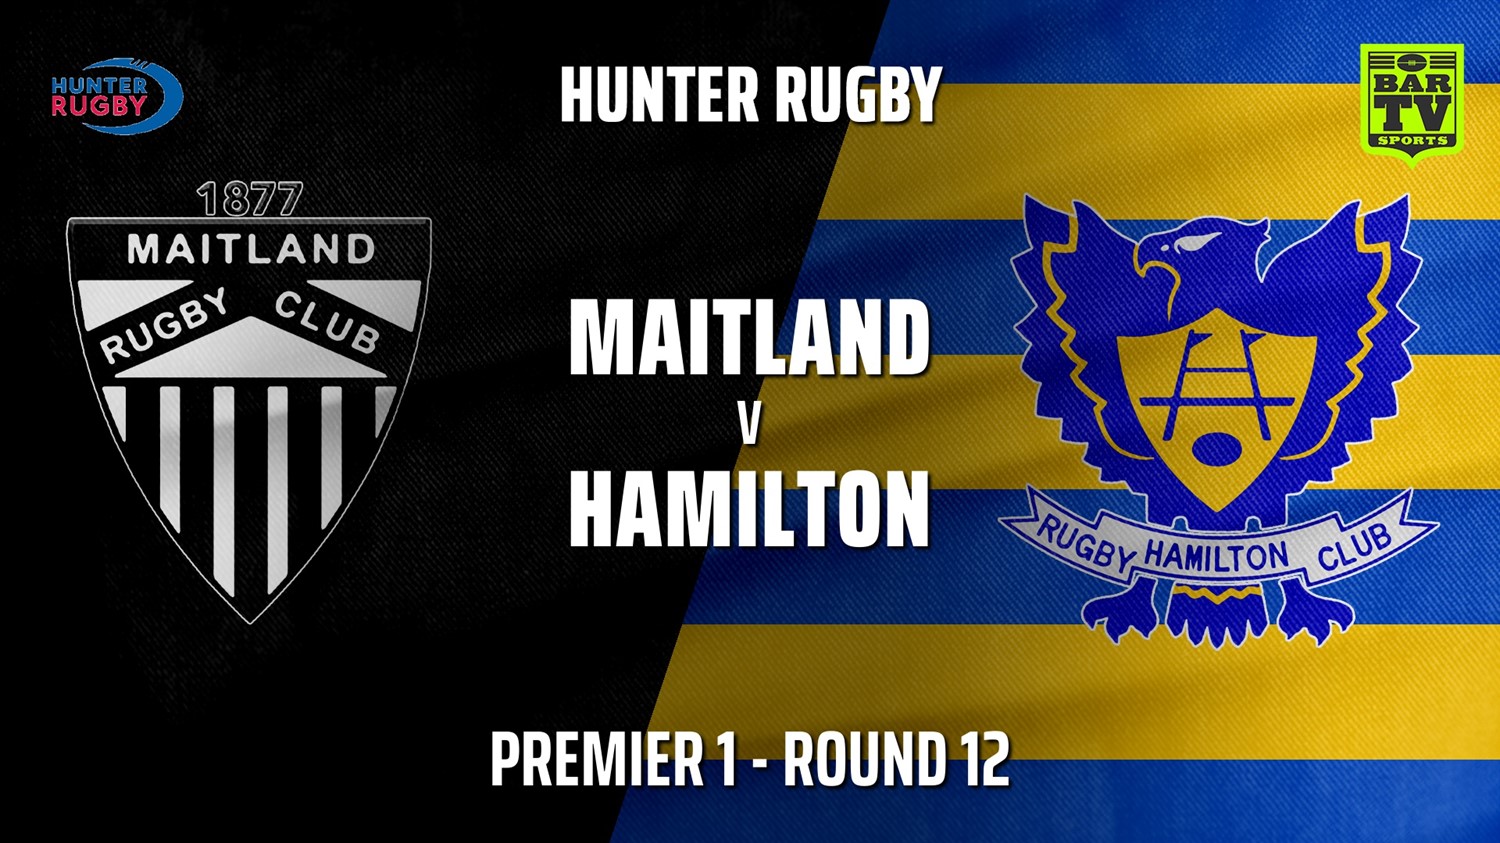 210710-Hunter Rugby Round 12 - Premier 1 - Maitland v Hamilton Hawks Slate Image